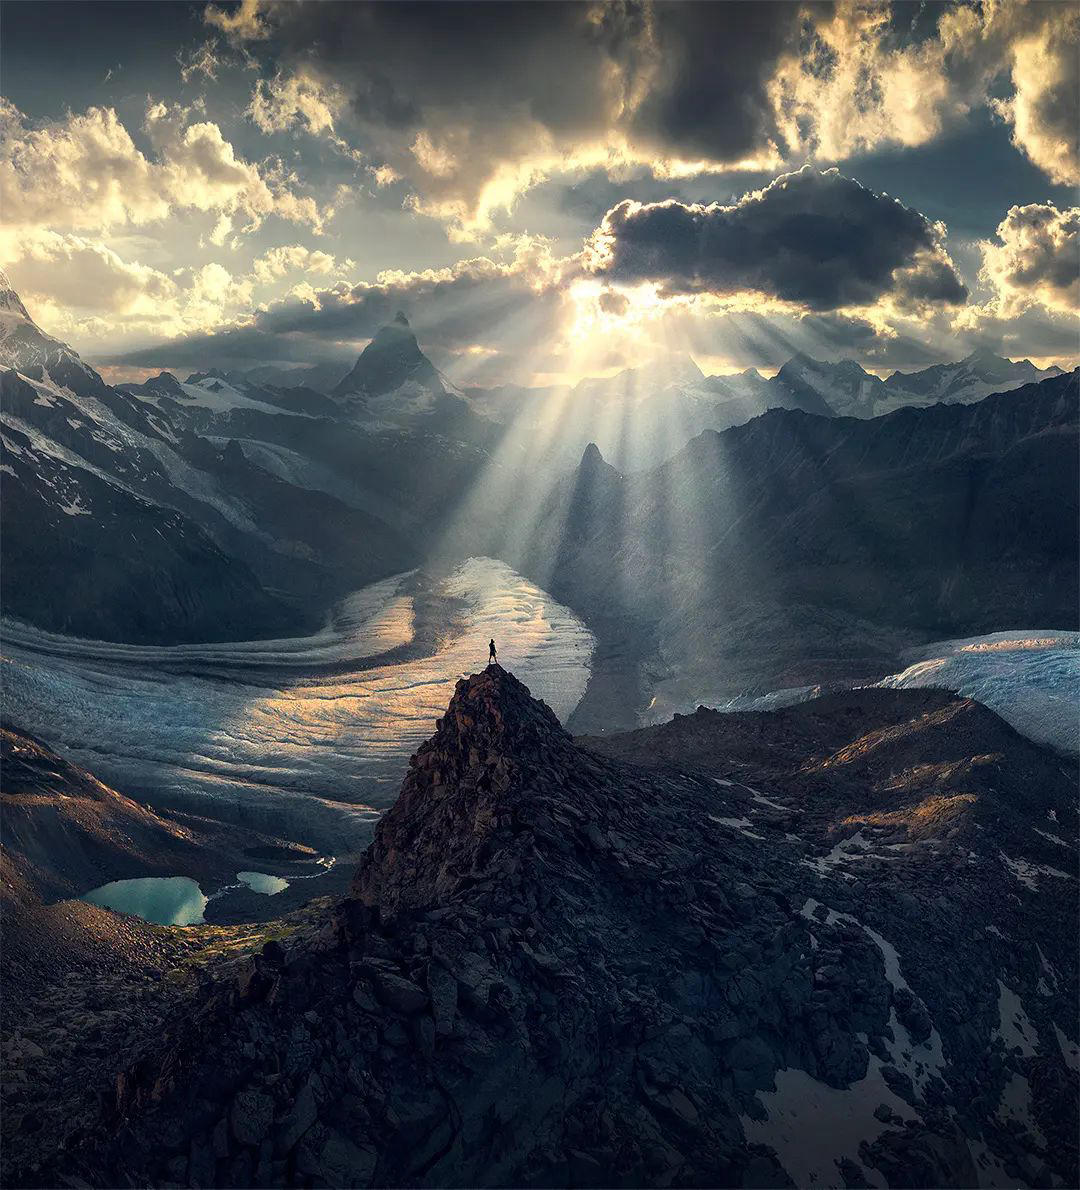 Max Rive - Setting sun in the Swiss Alps 🇨🇭